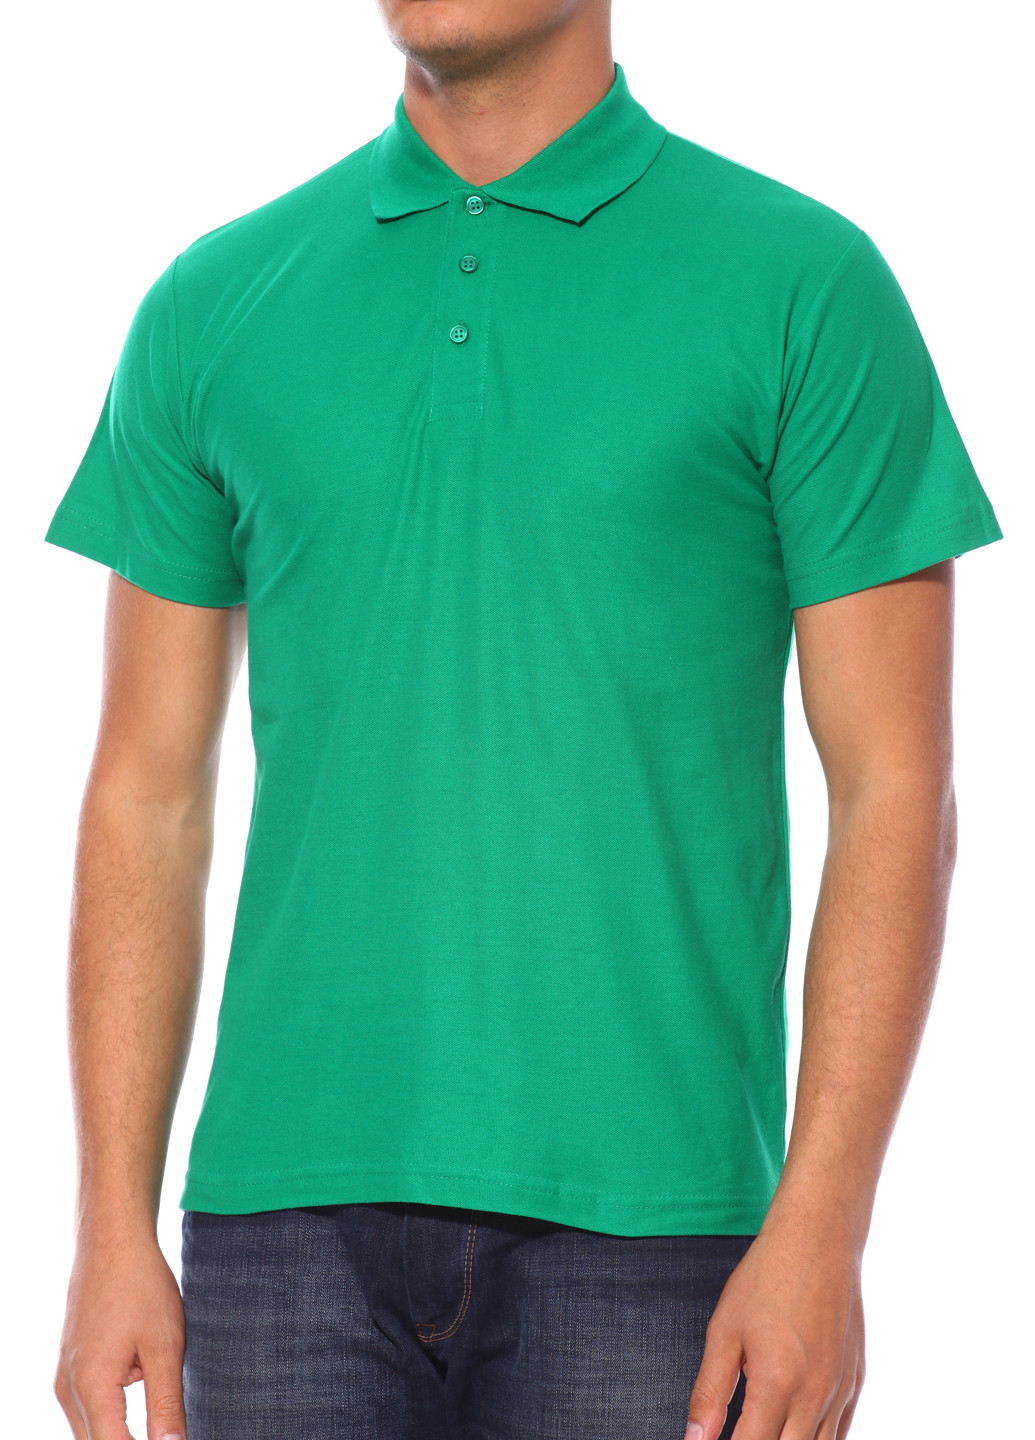 Зеленая футболка-поло для мужчин Sol's